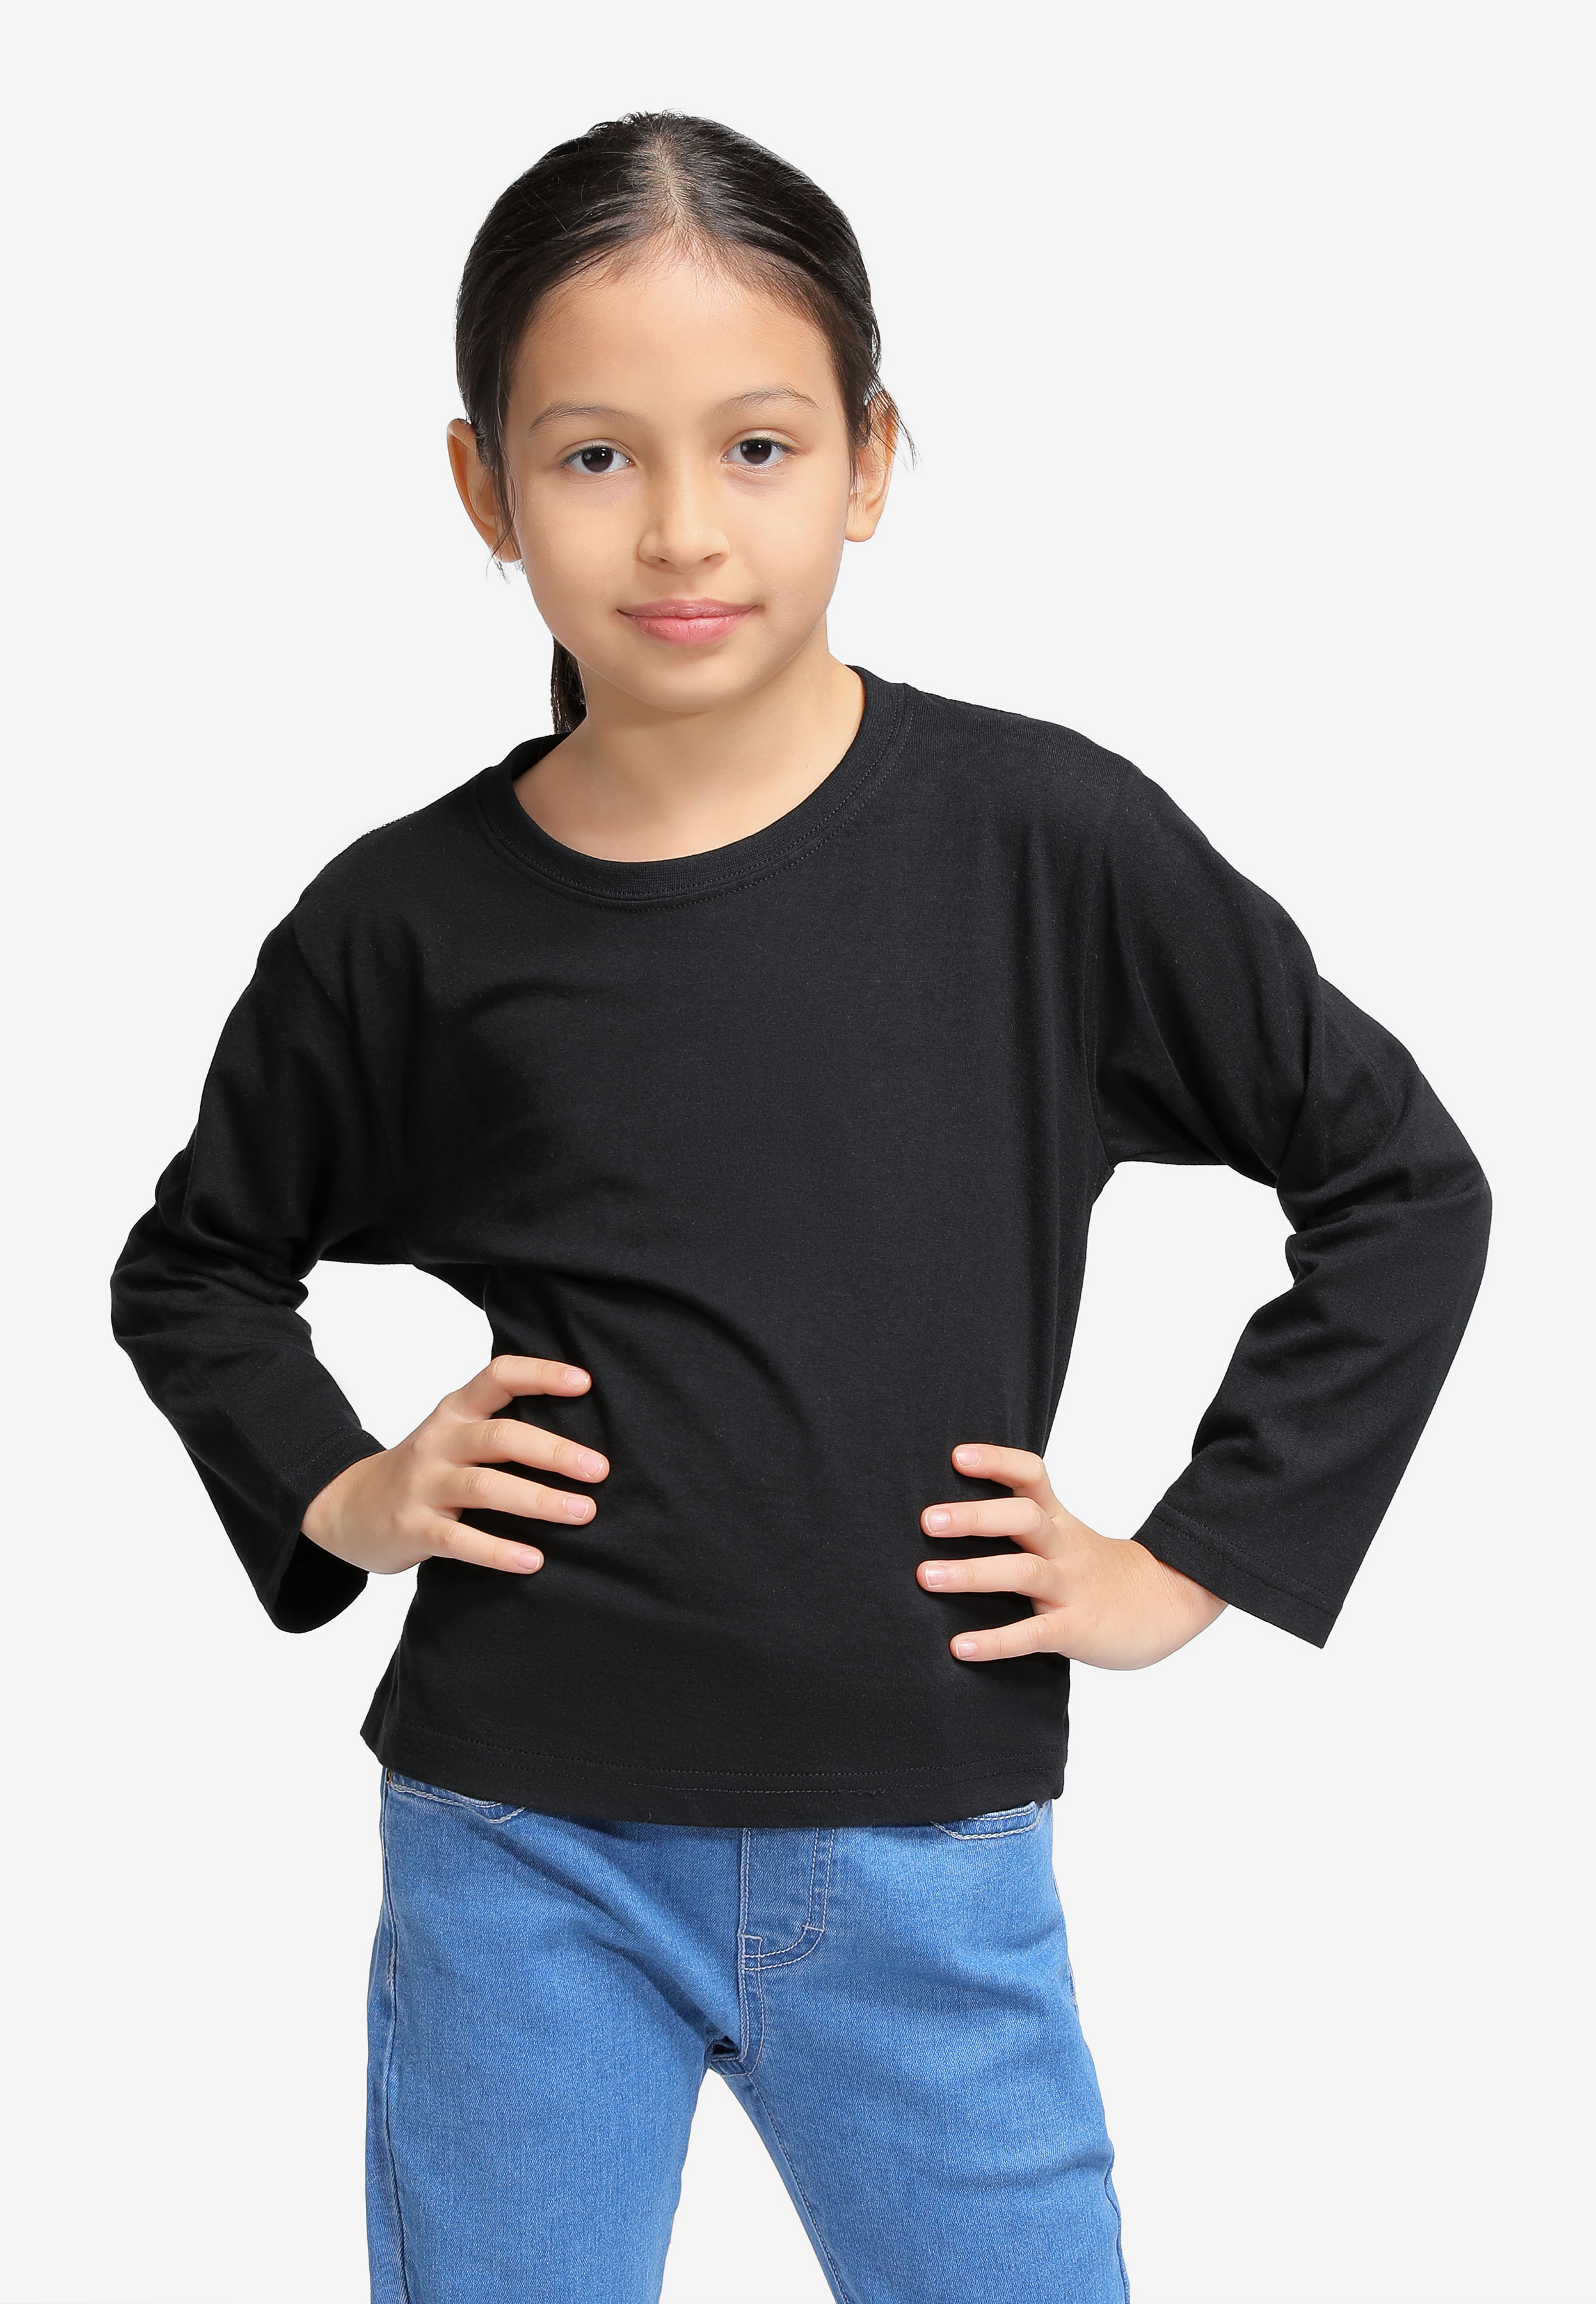 100% Cotton Long Sleeve Round Neck Kids-Black (PK-601-09) - Panbasic